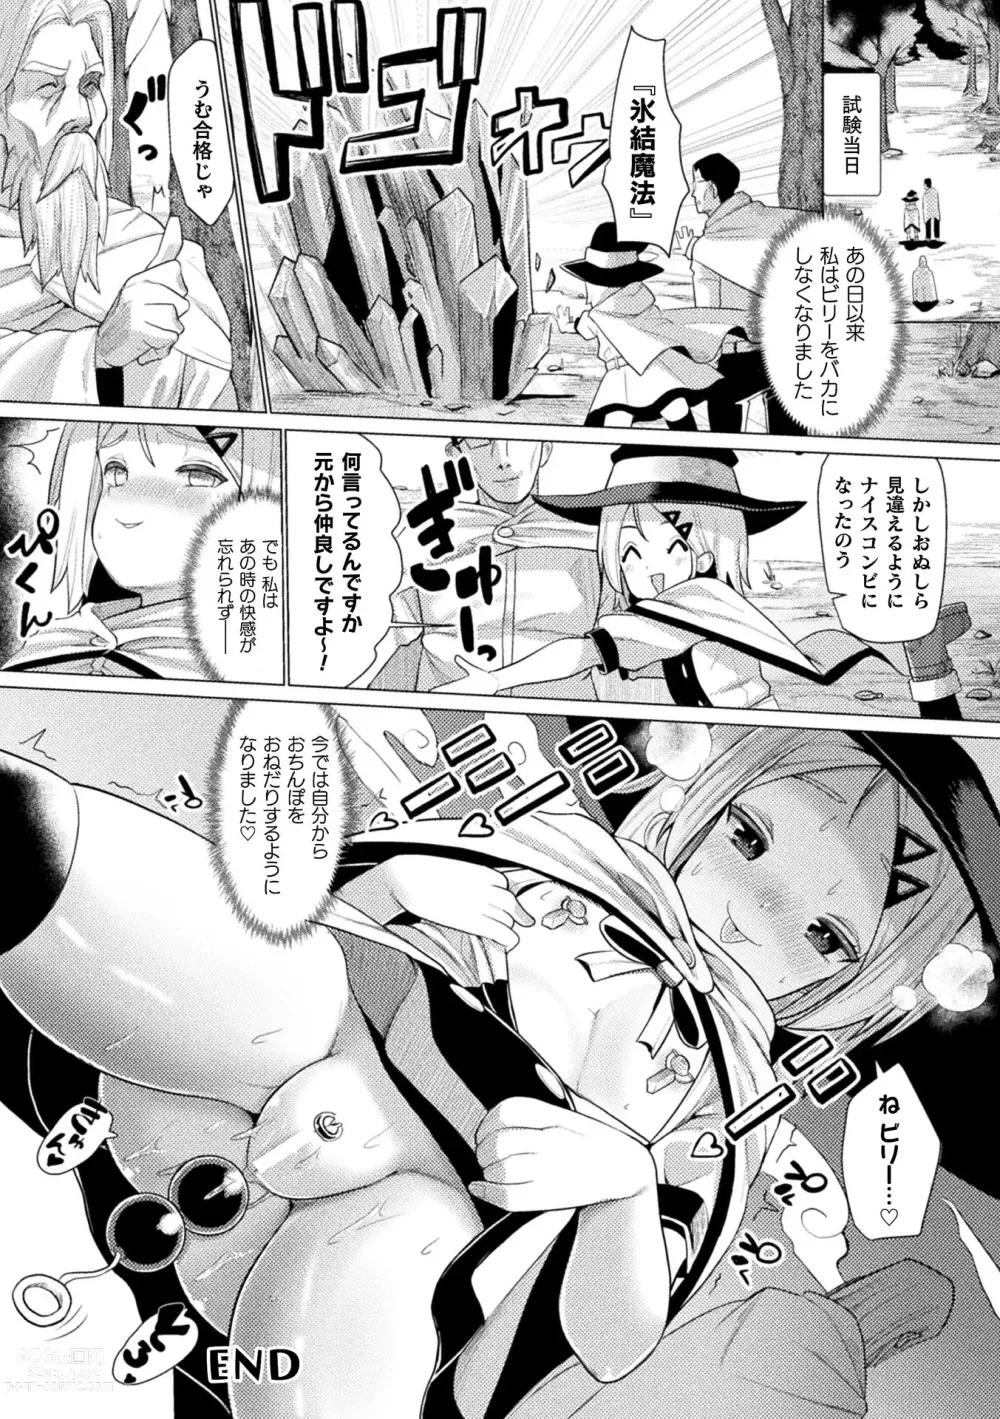 Page 168 of manga Mesugaki mitchiri ecchi